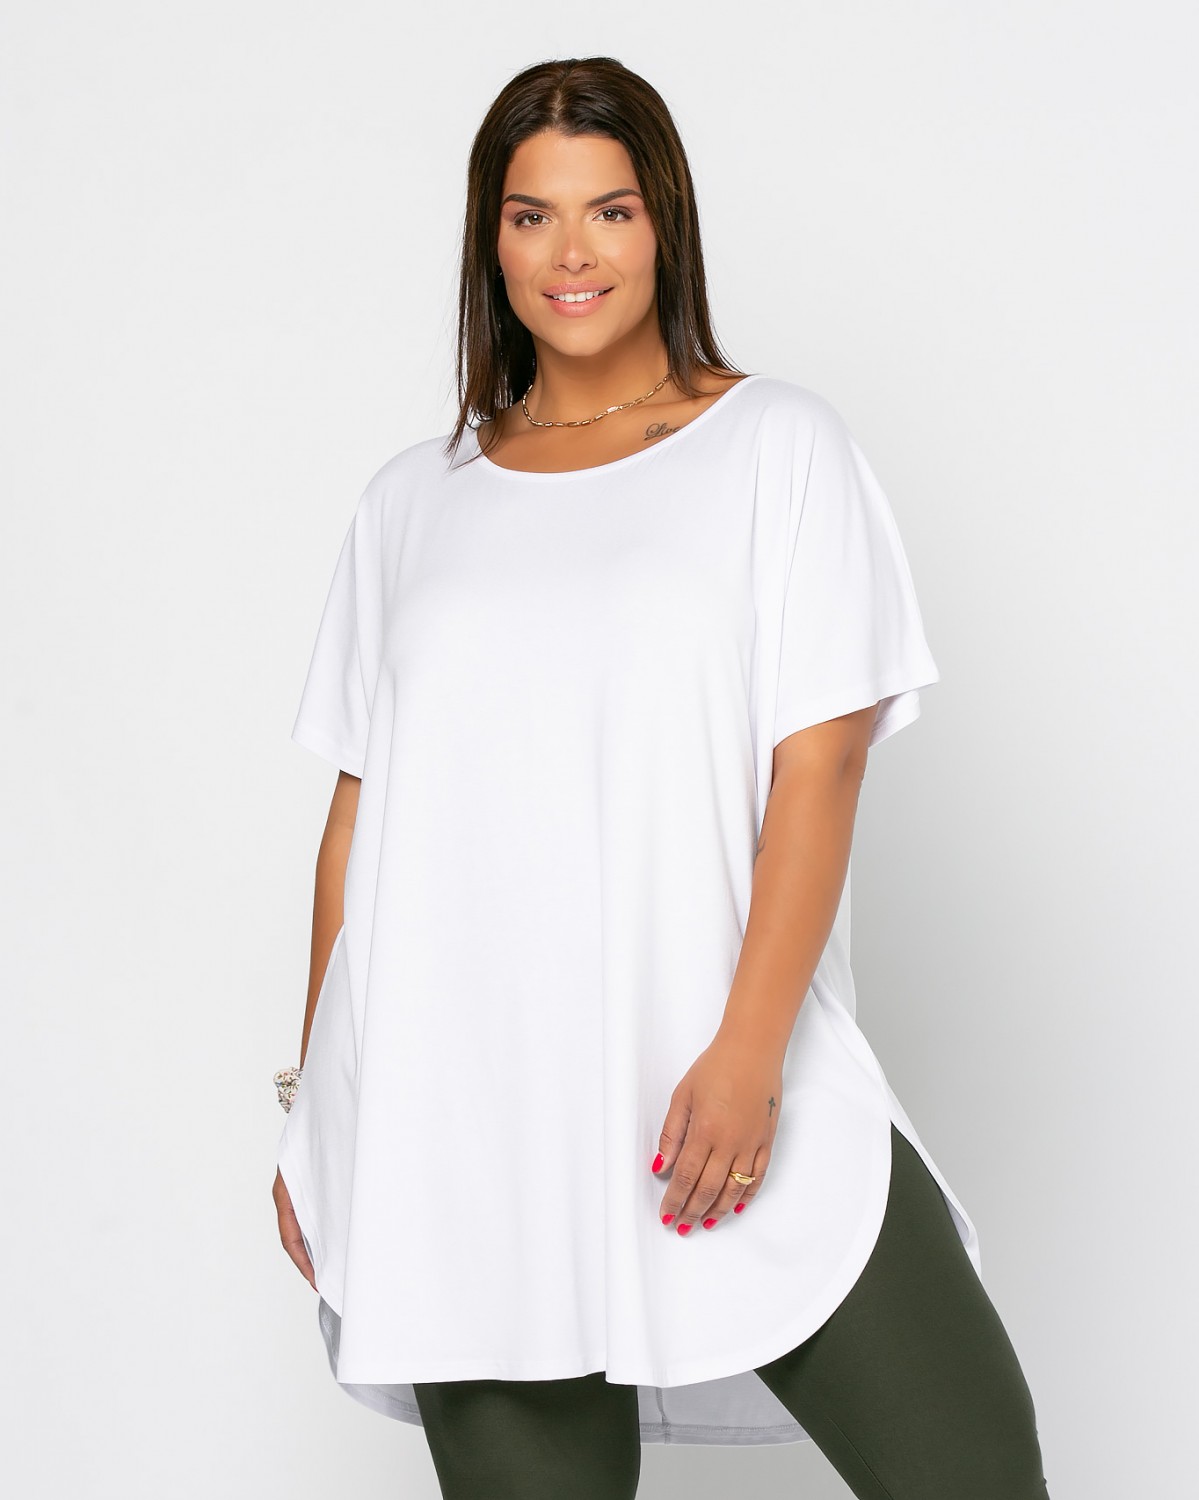 Elise Τ-Shirt, kolor biały